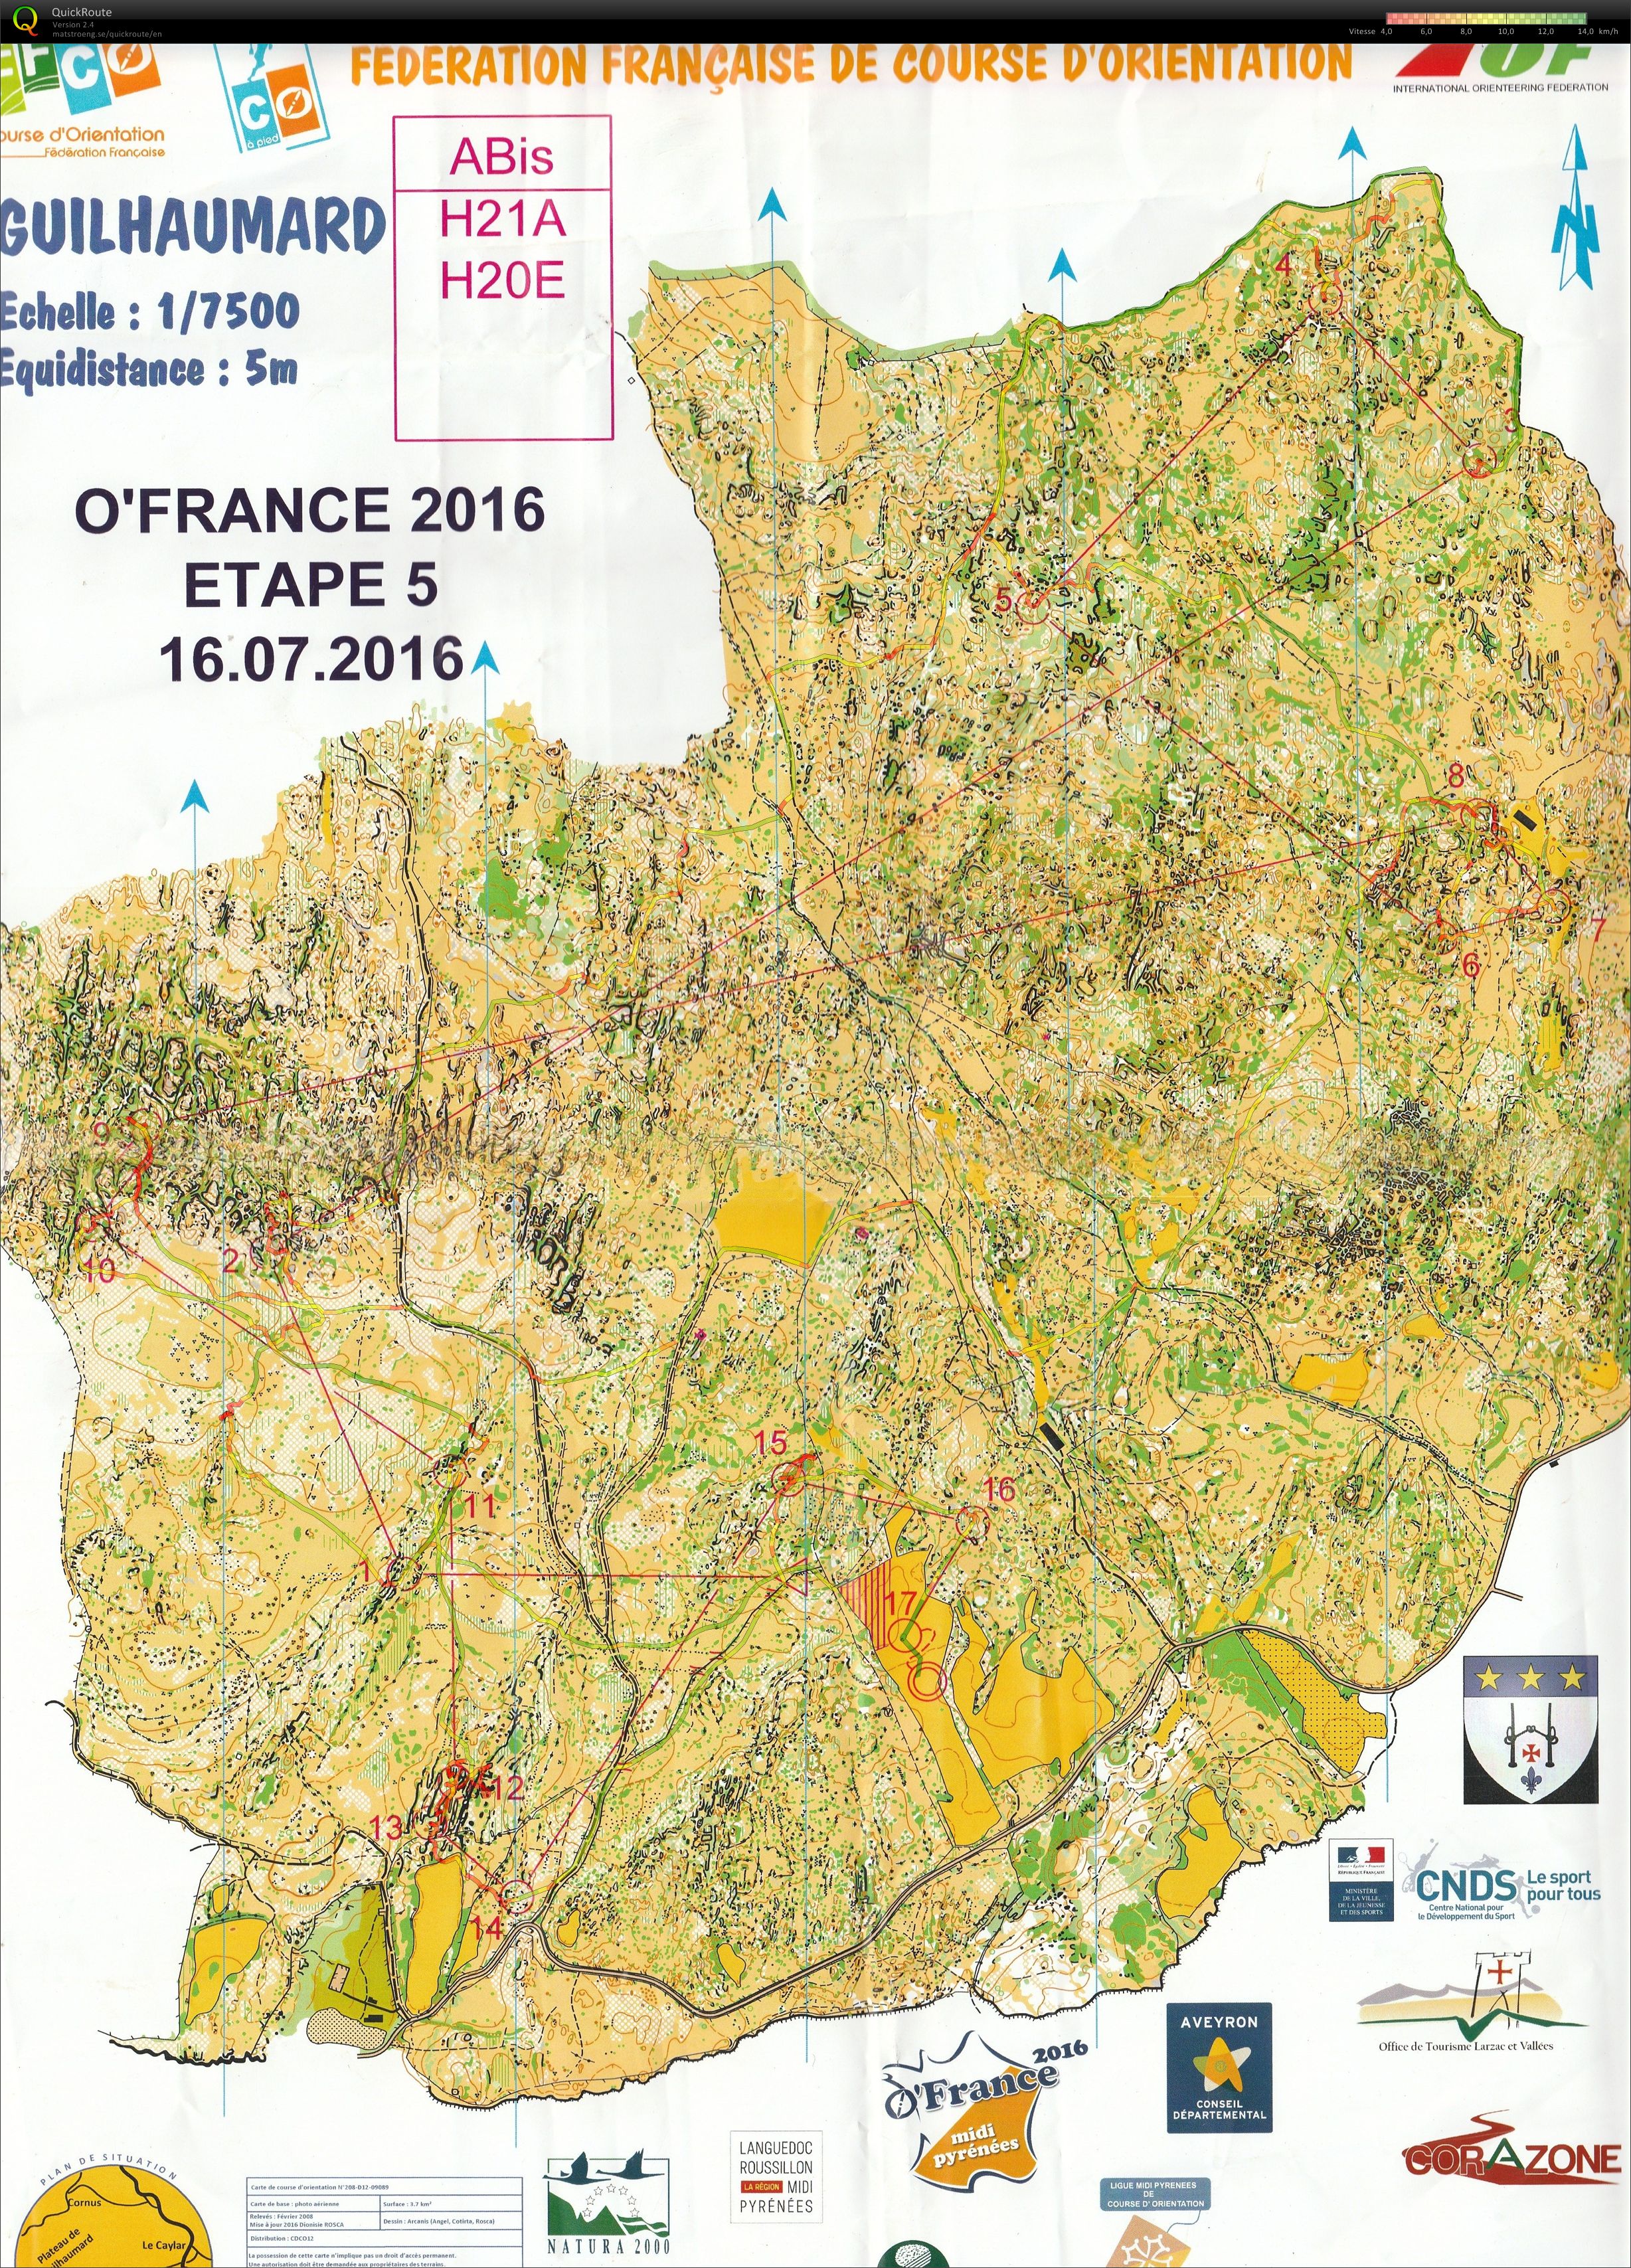 O'France Etape 5 (16.07.2016)